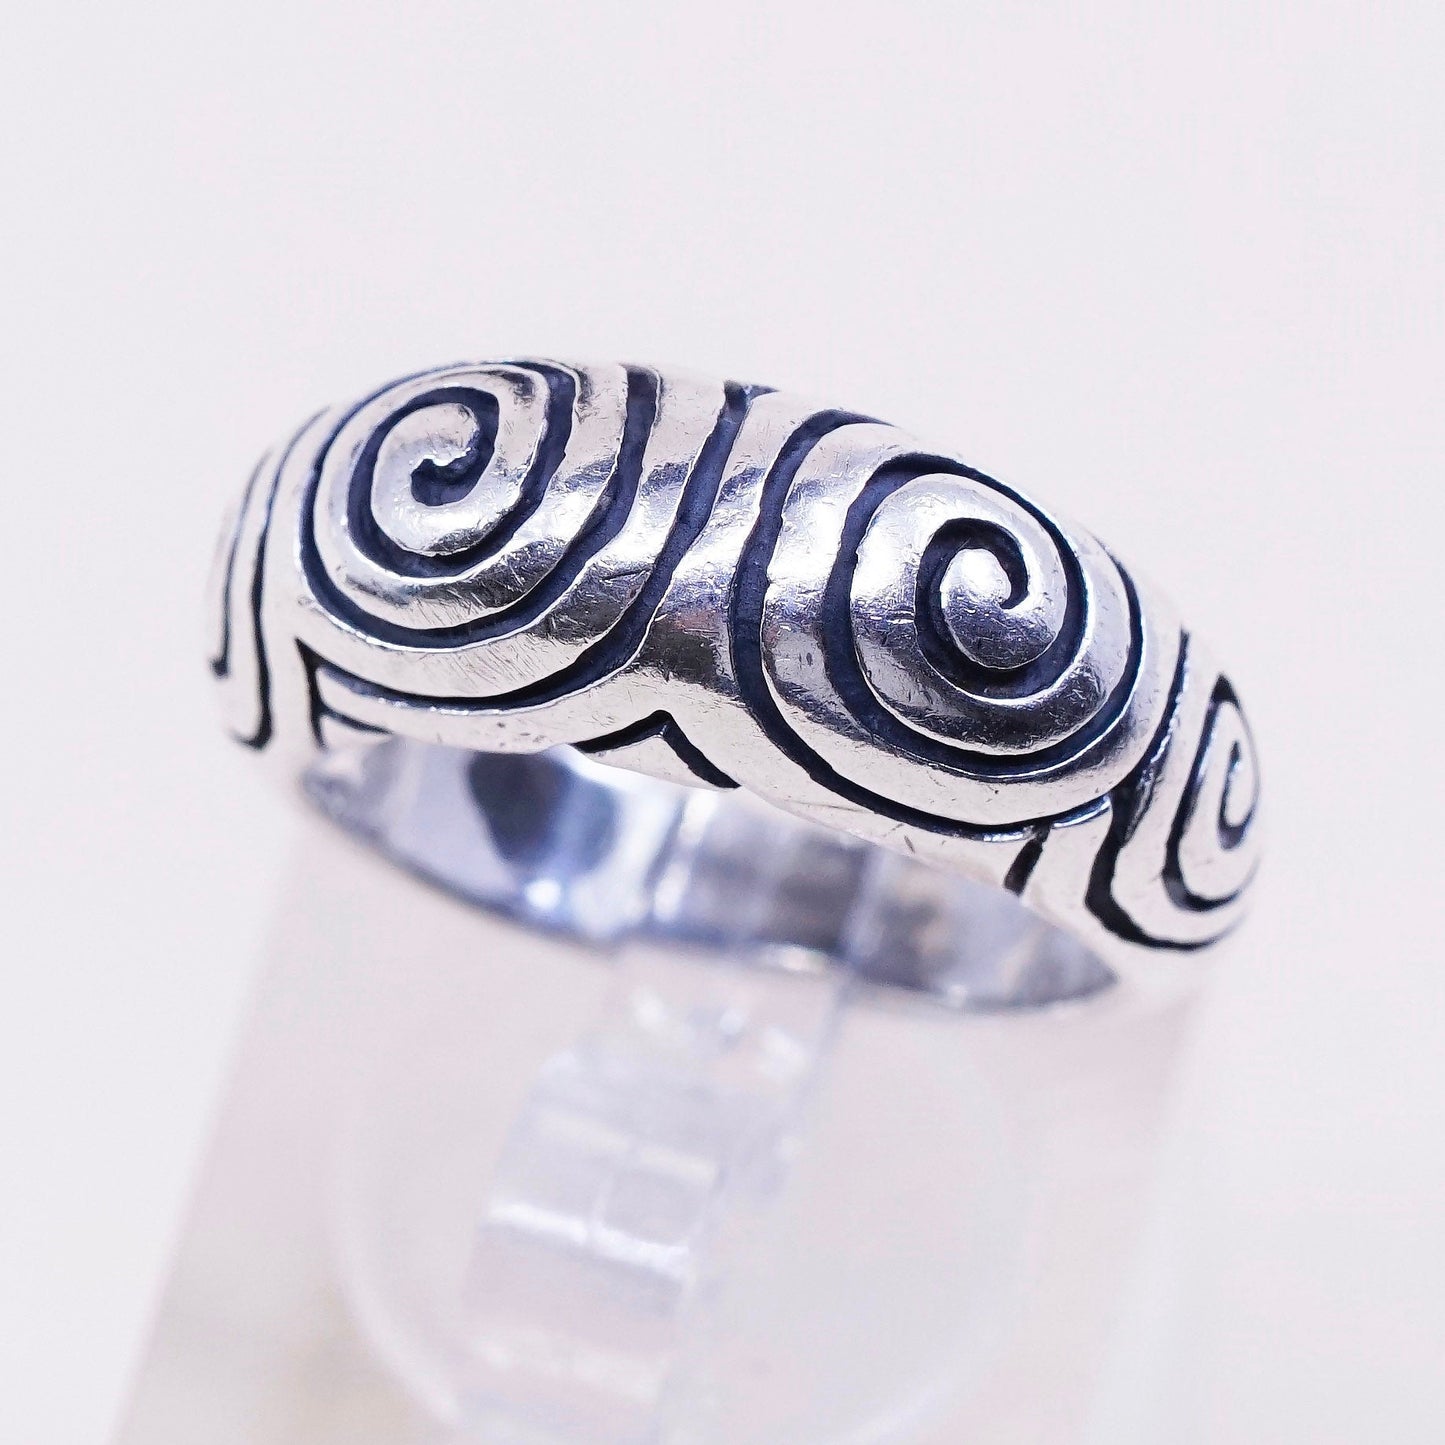 sz 7, vtg CW Sterling silver handmade ring, 925 band w/ swirl textured